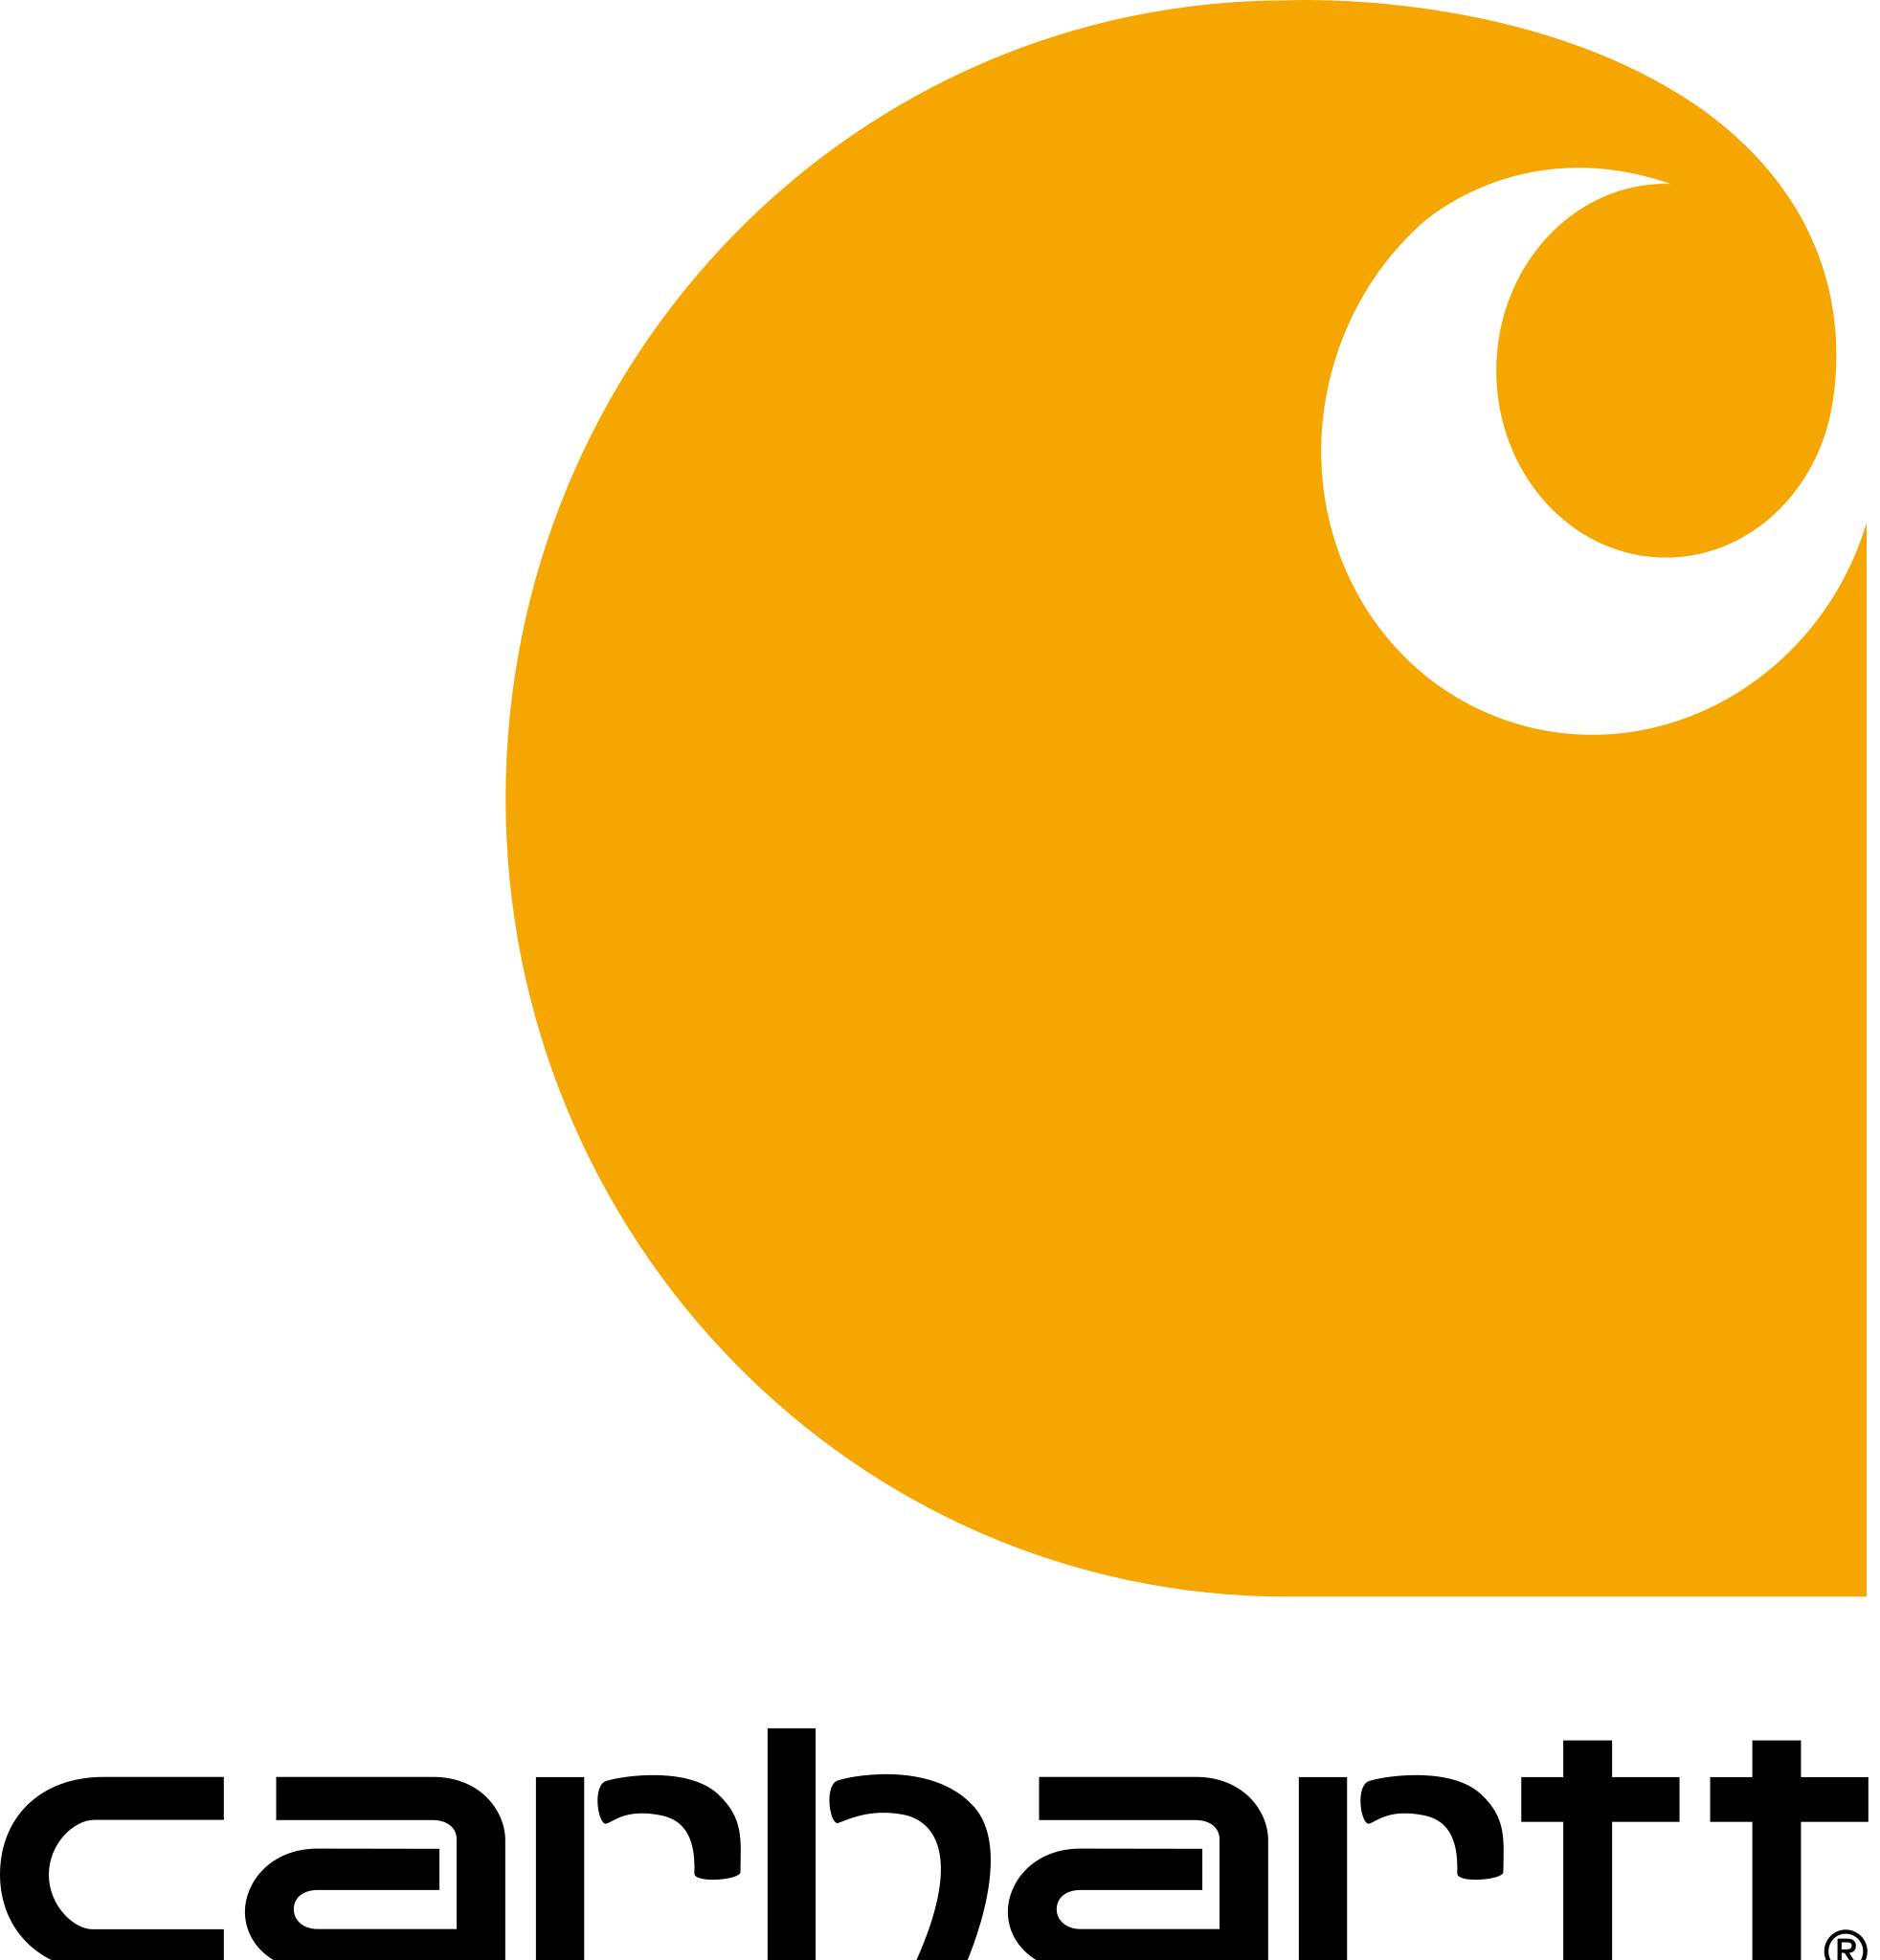 Carhartt logo png transparent image download